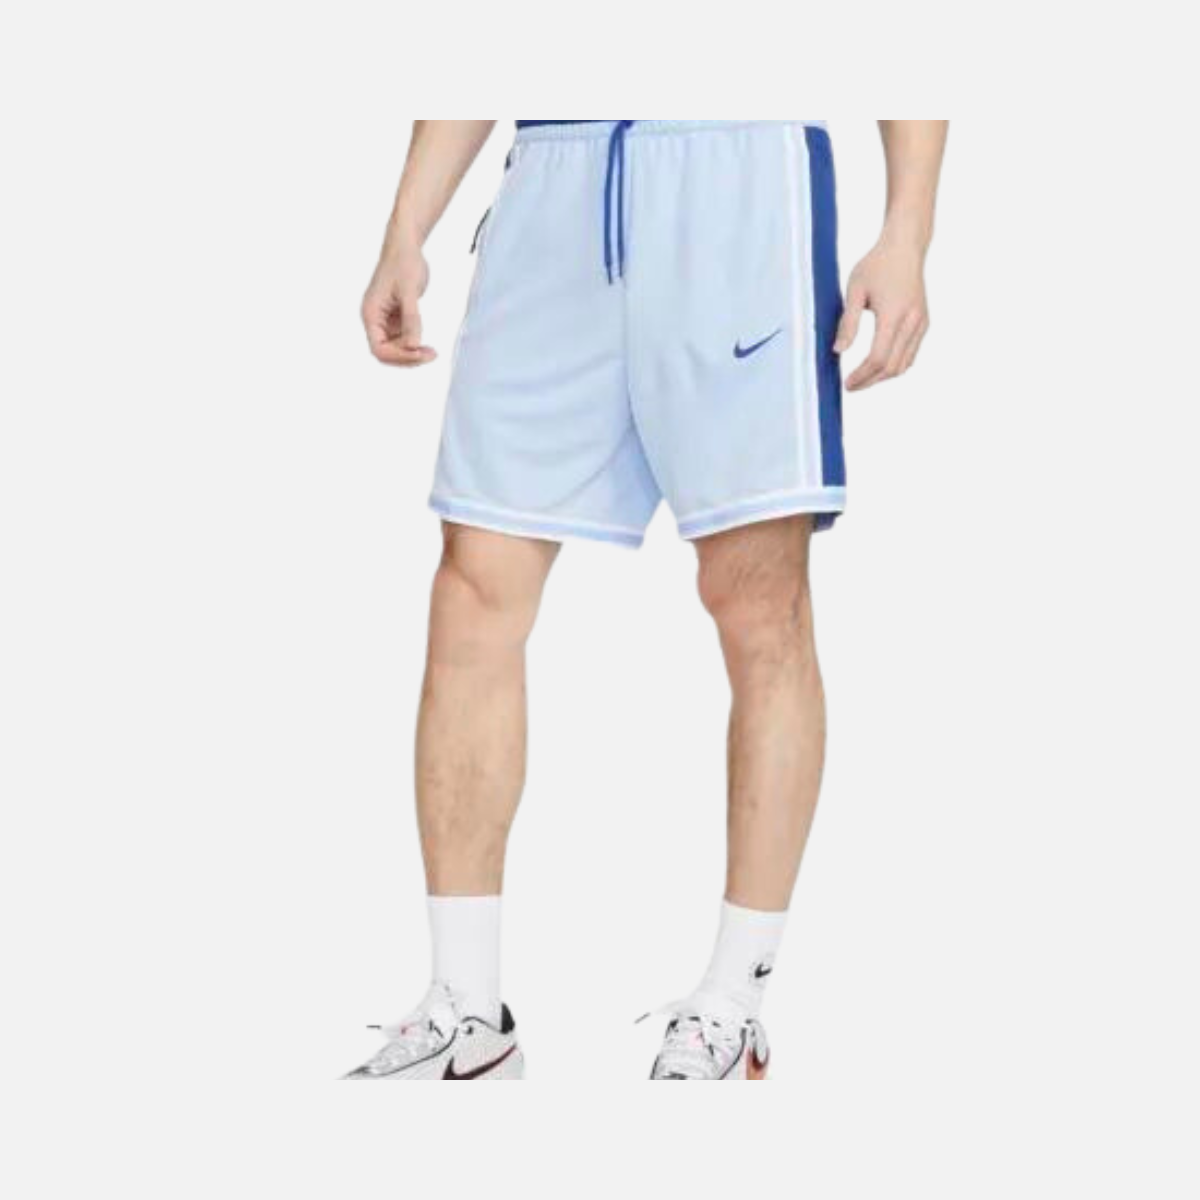 Nike Dri-FIT DNA+ Men's Basketball Shorts -Cobalt Bliss/College Blue/White/College Blue